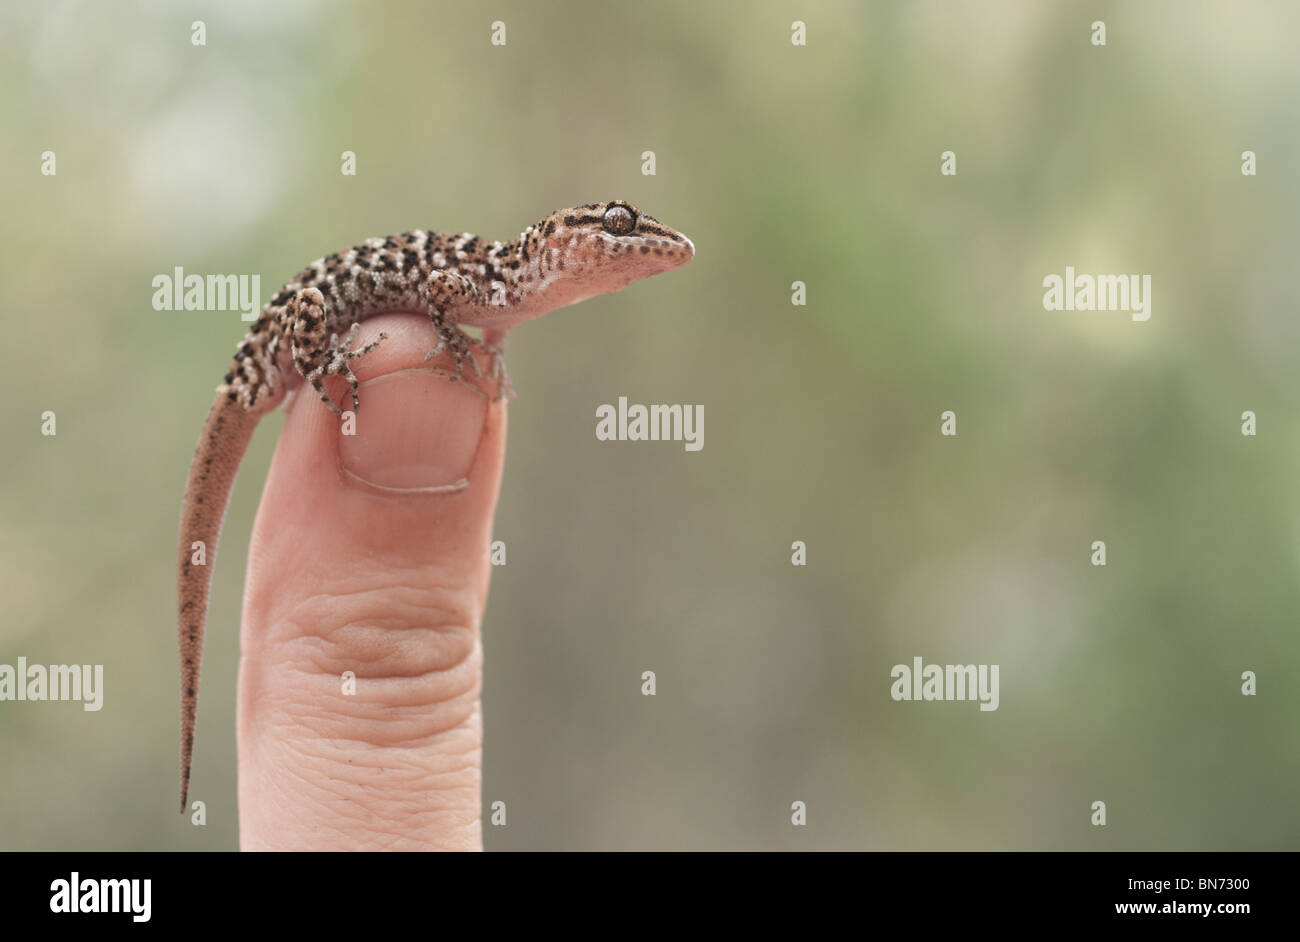 vittatus gecko reptile lizard animal wildlife australian Stock Photo